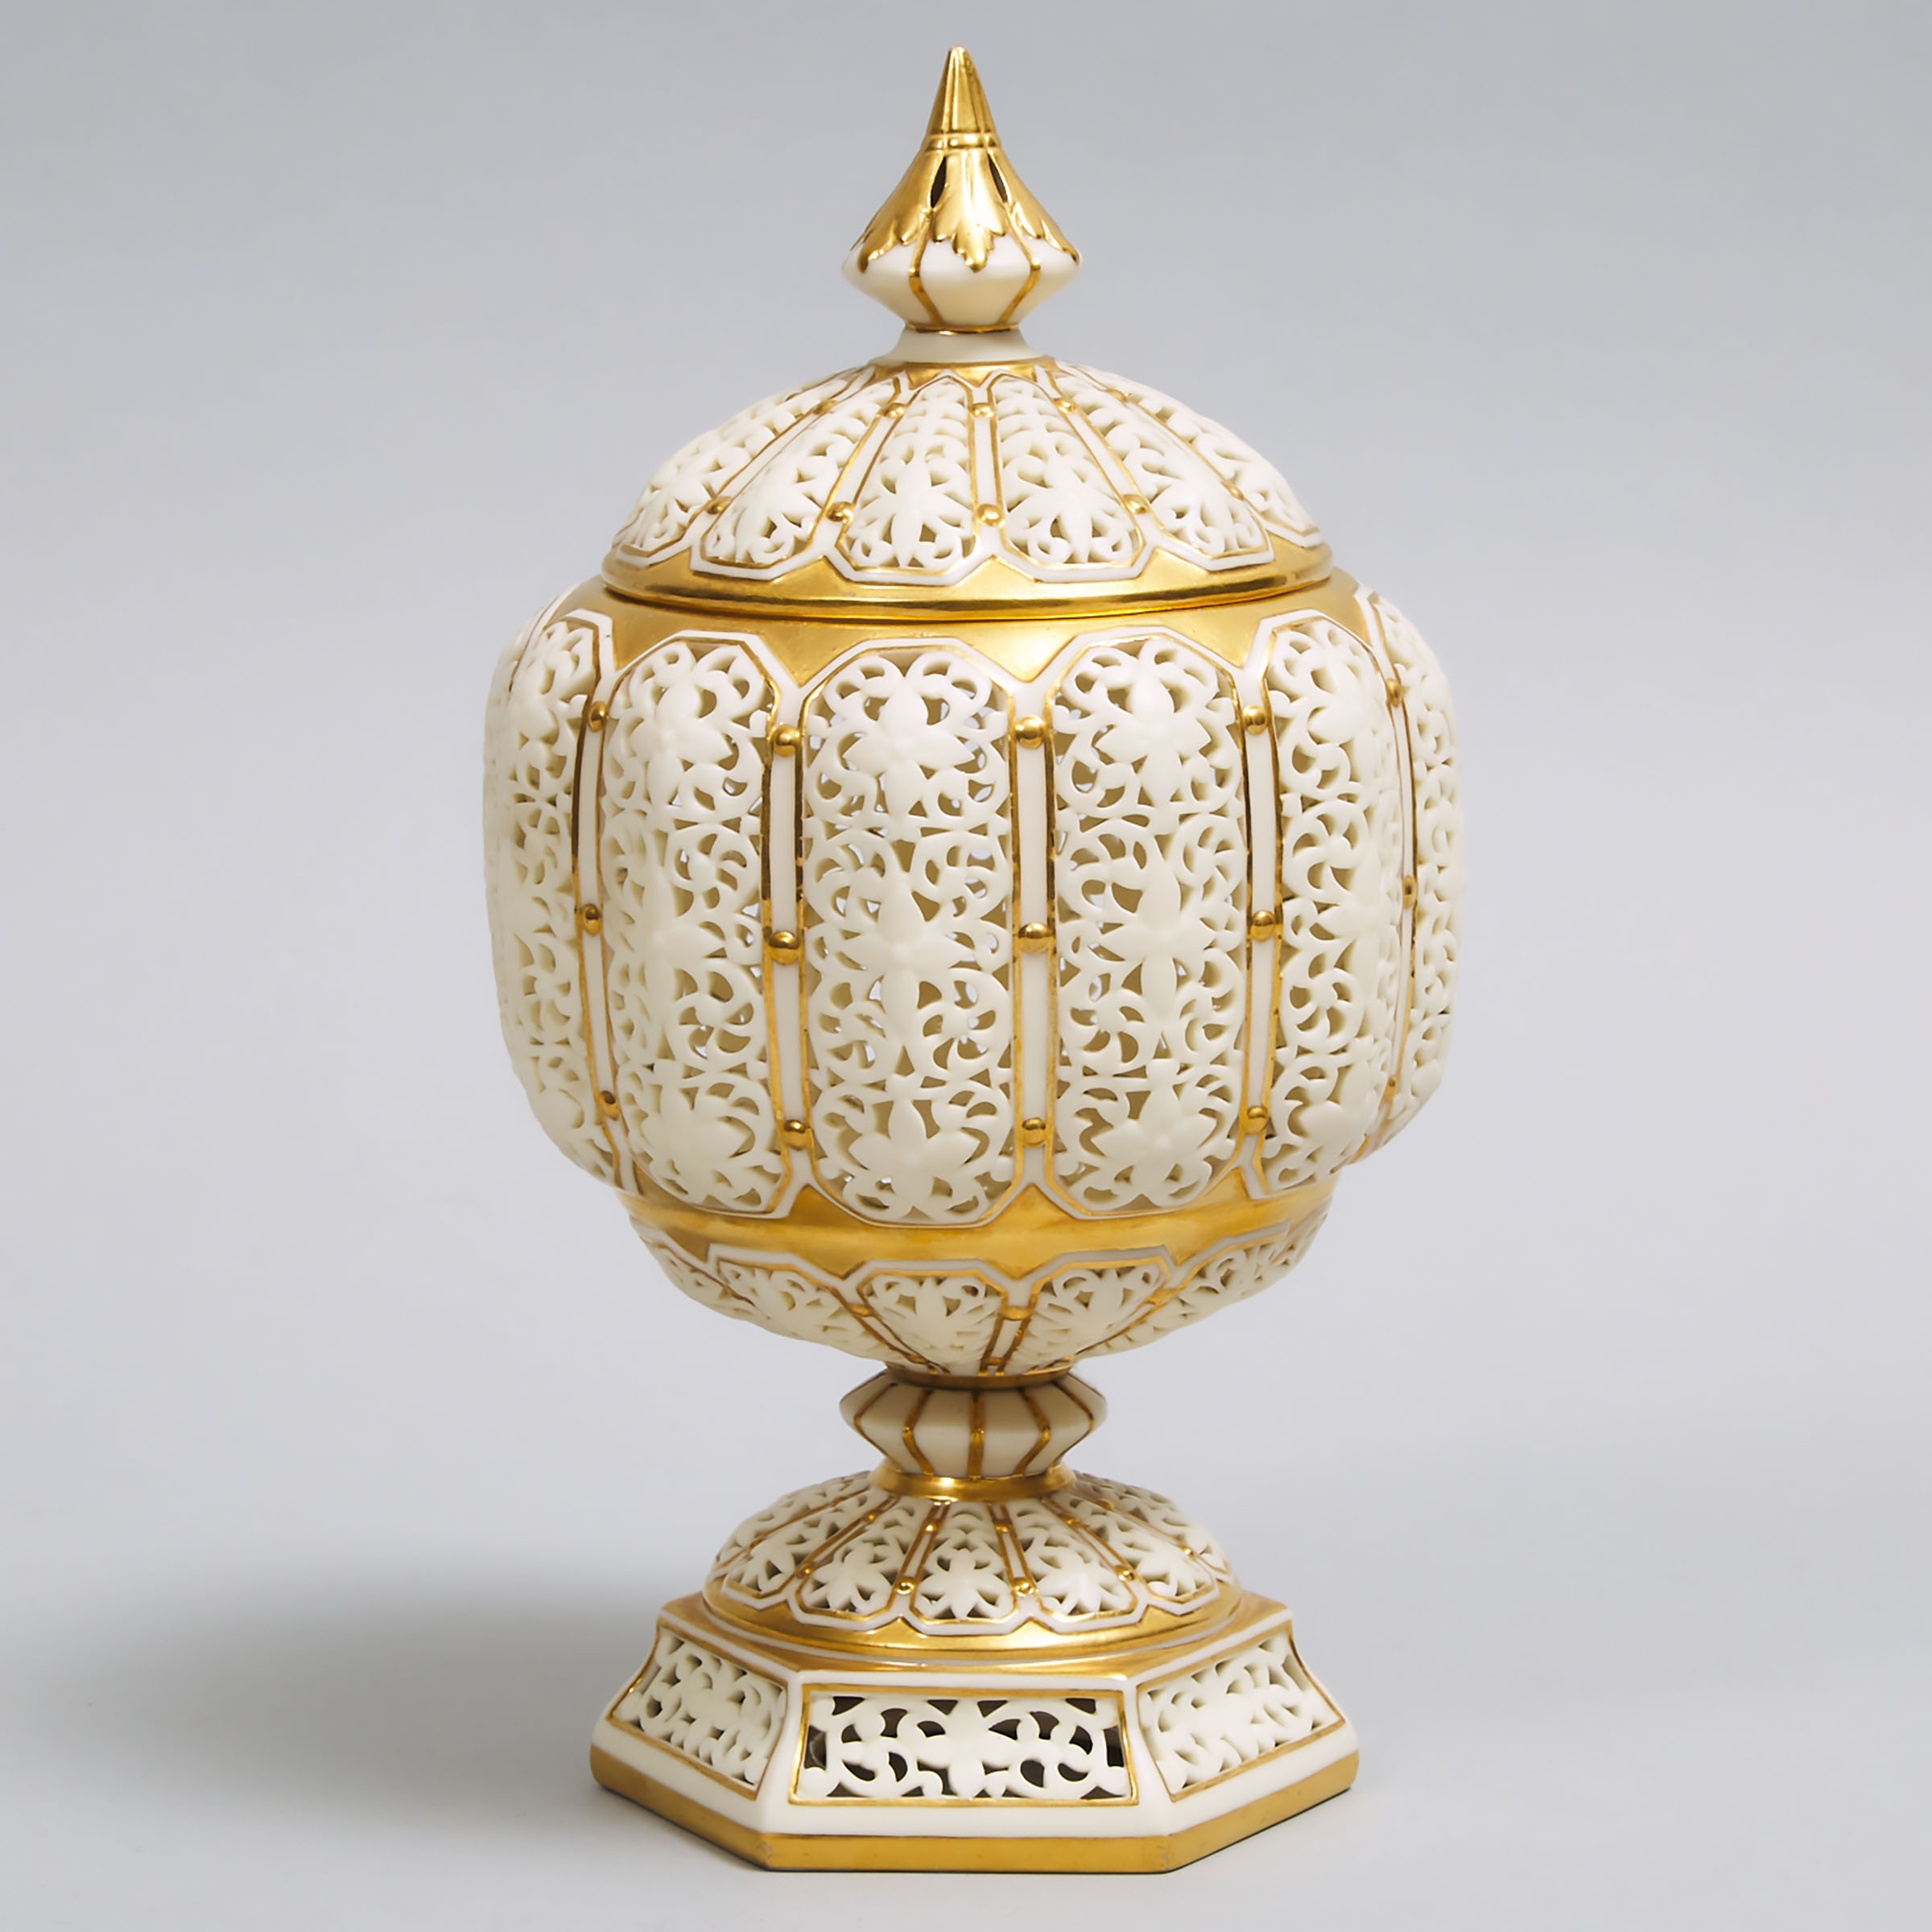 Grainger Worcester Reticulated Globular Covered Vase, c.1891-1902